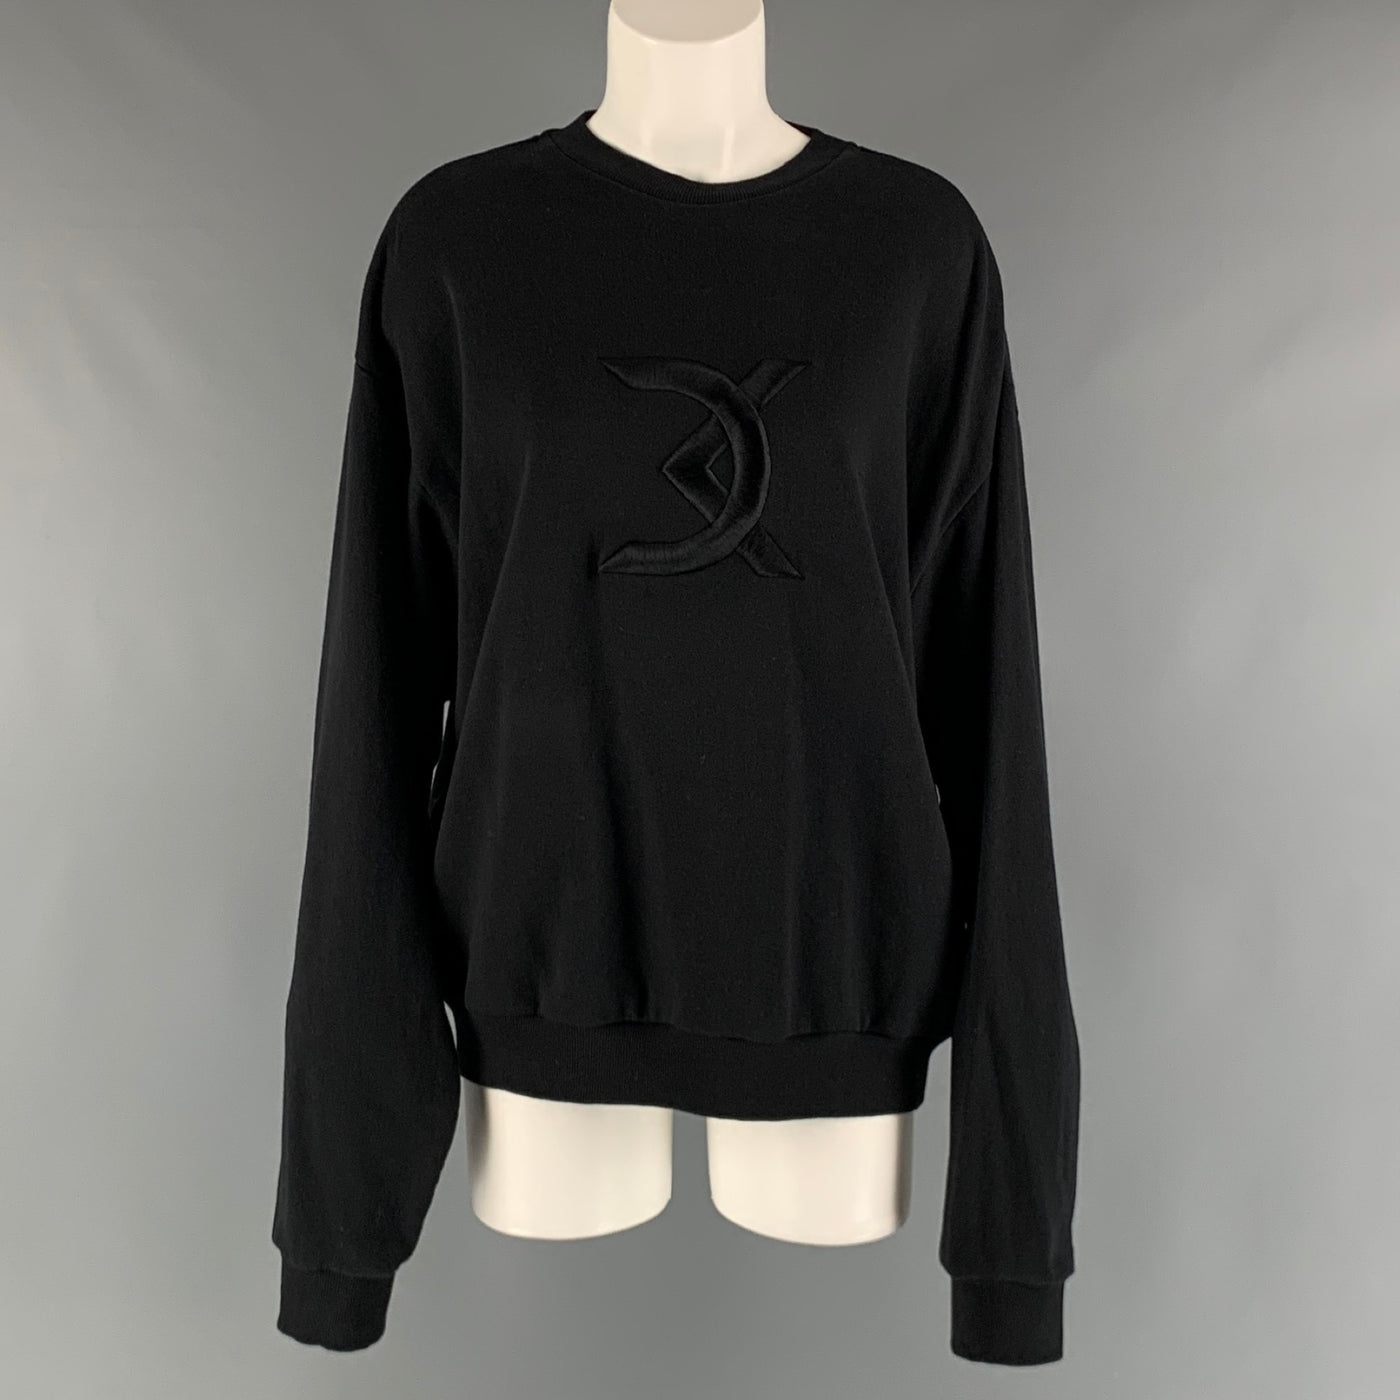 DAVID KOMA Size XS Black Cotton Embroidered Sweatshirt Pullover